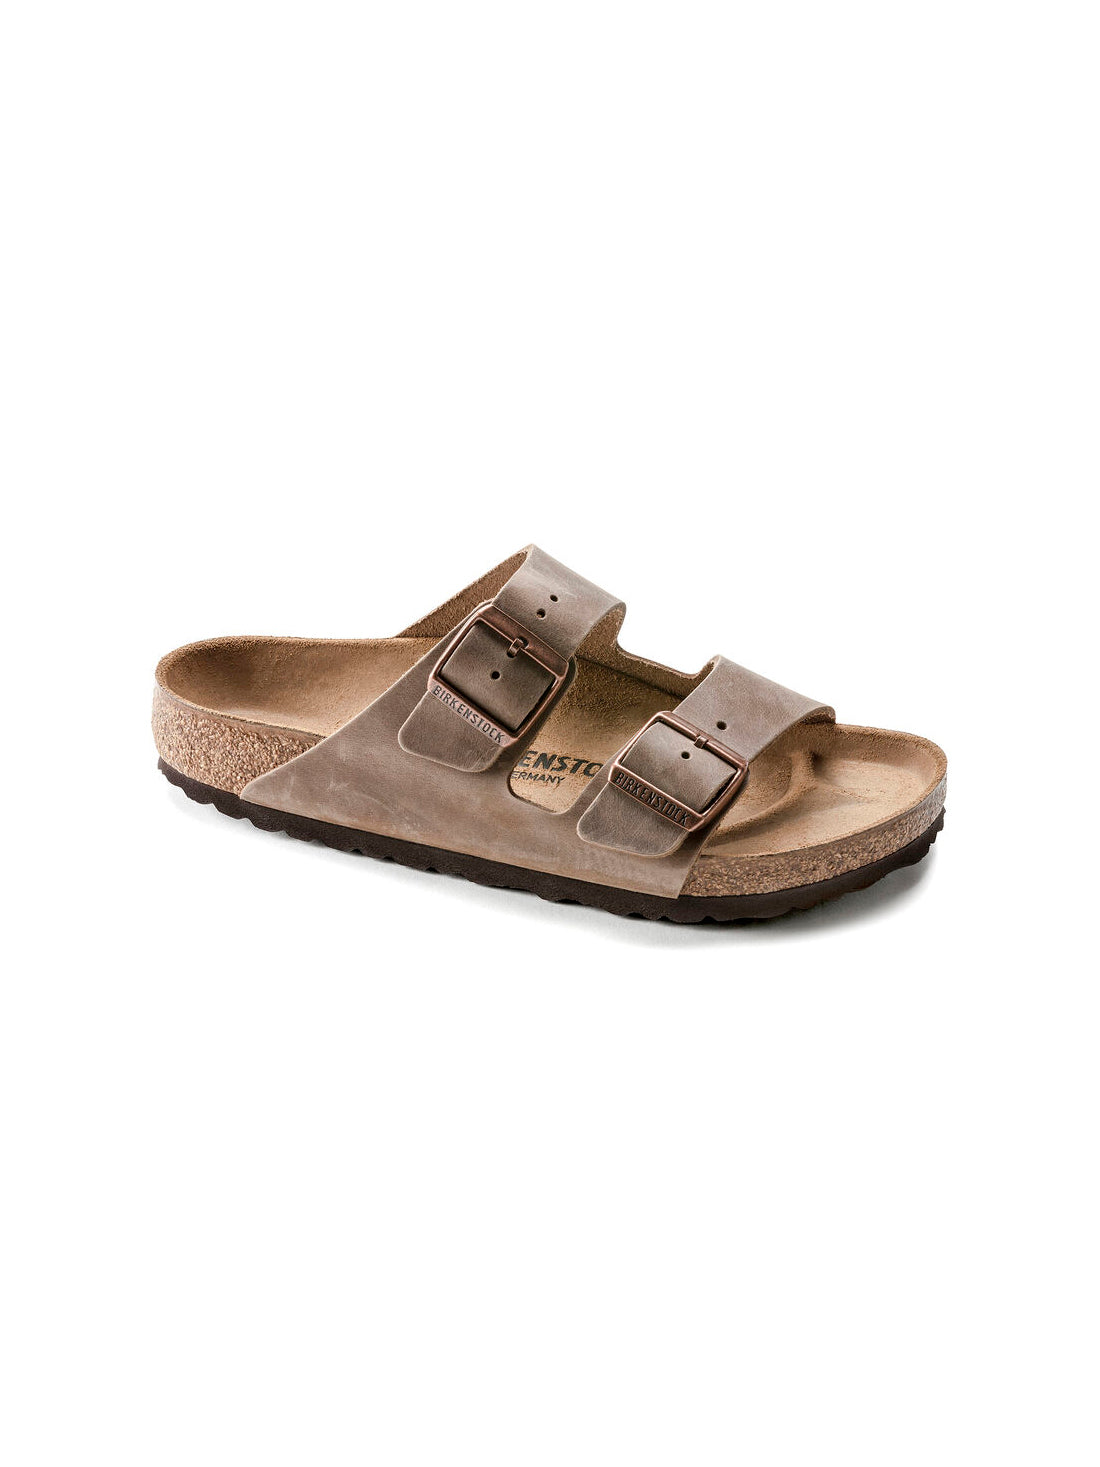 birkenstock arizona sandal in oiled leather tobacco regular